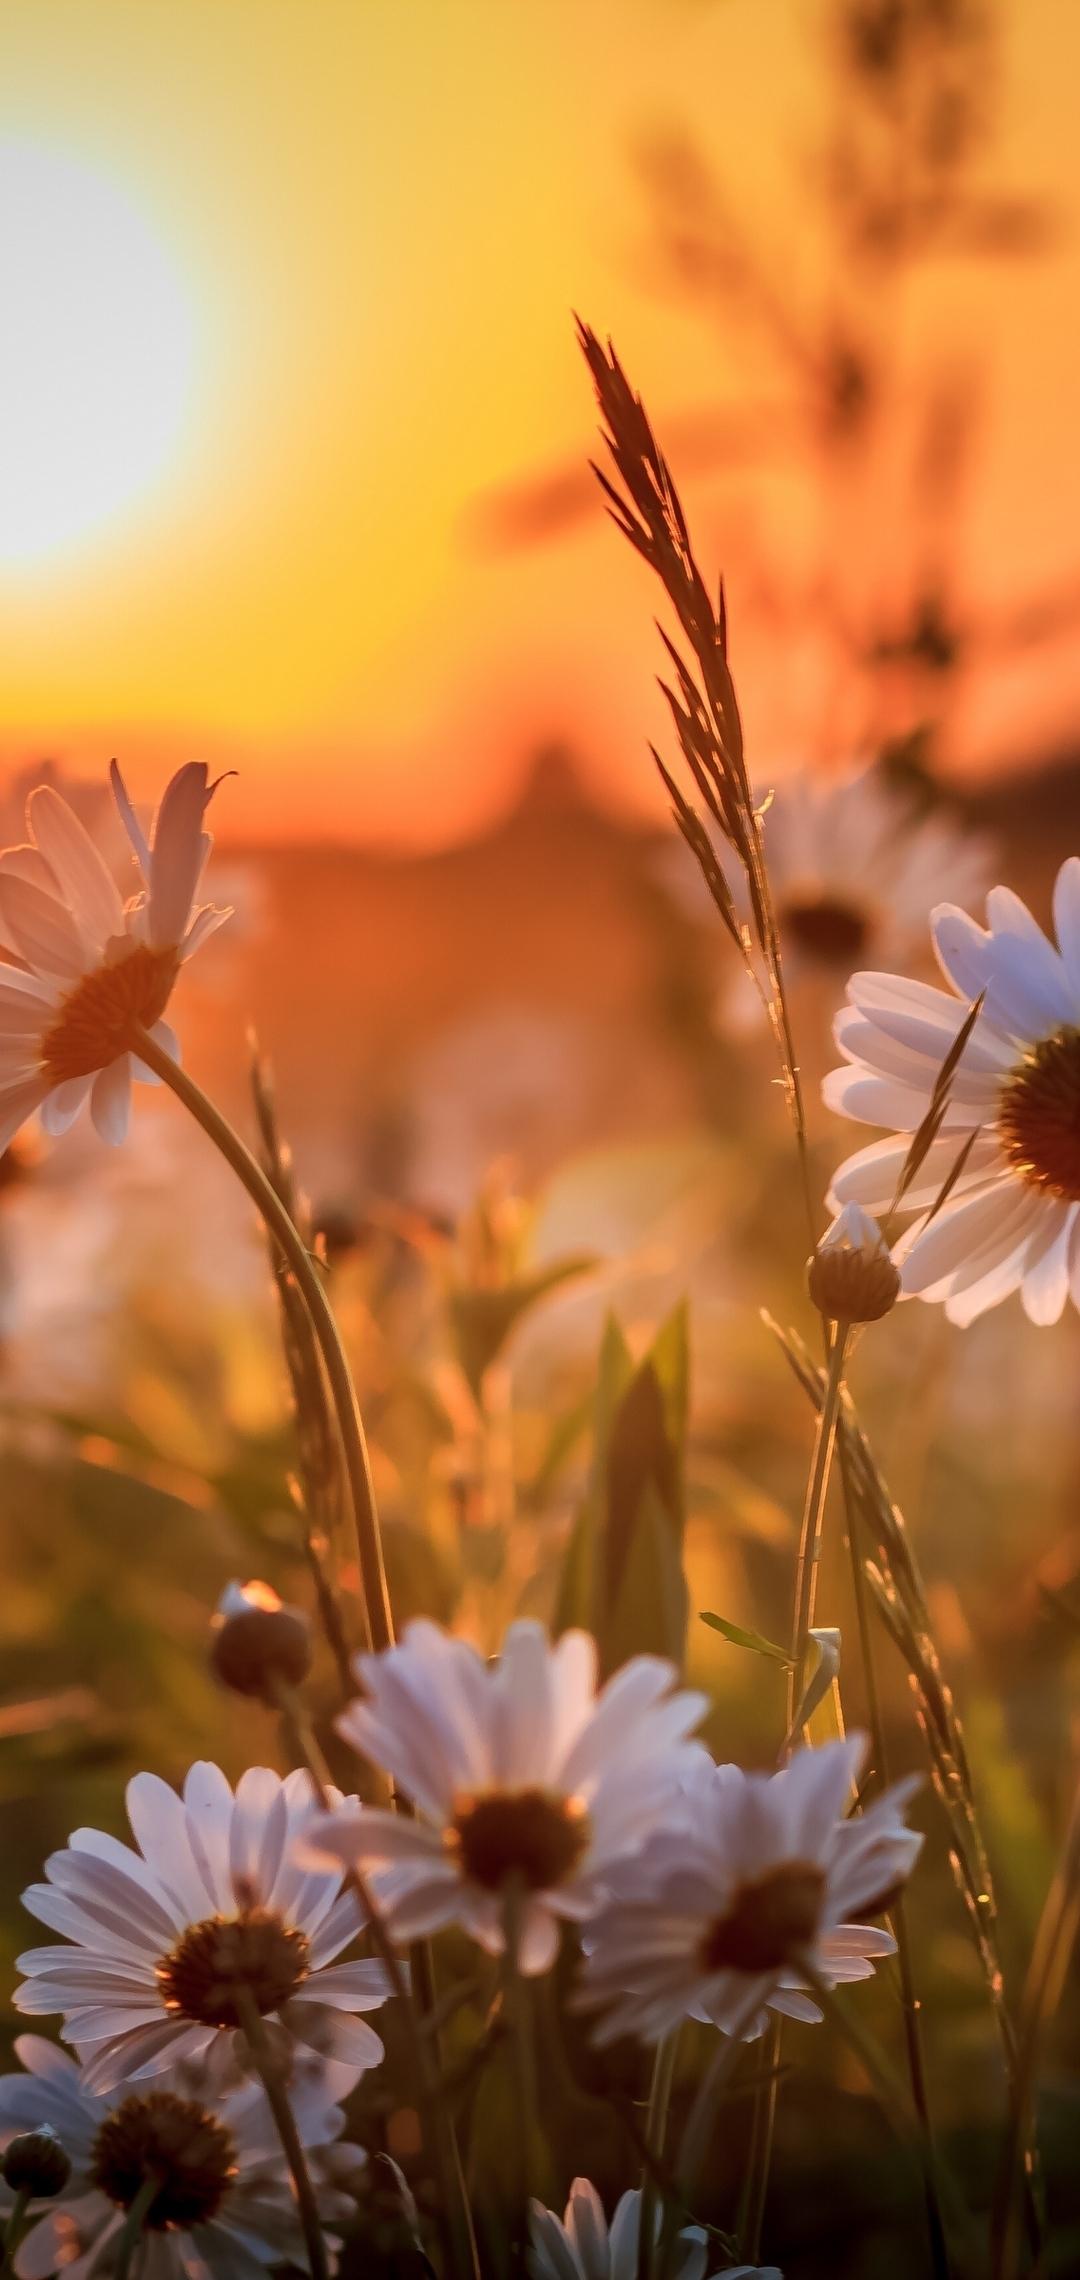 Картинка: Ромашки, цветы, травинки, закат, солнце, поле